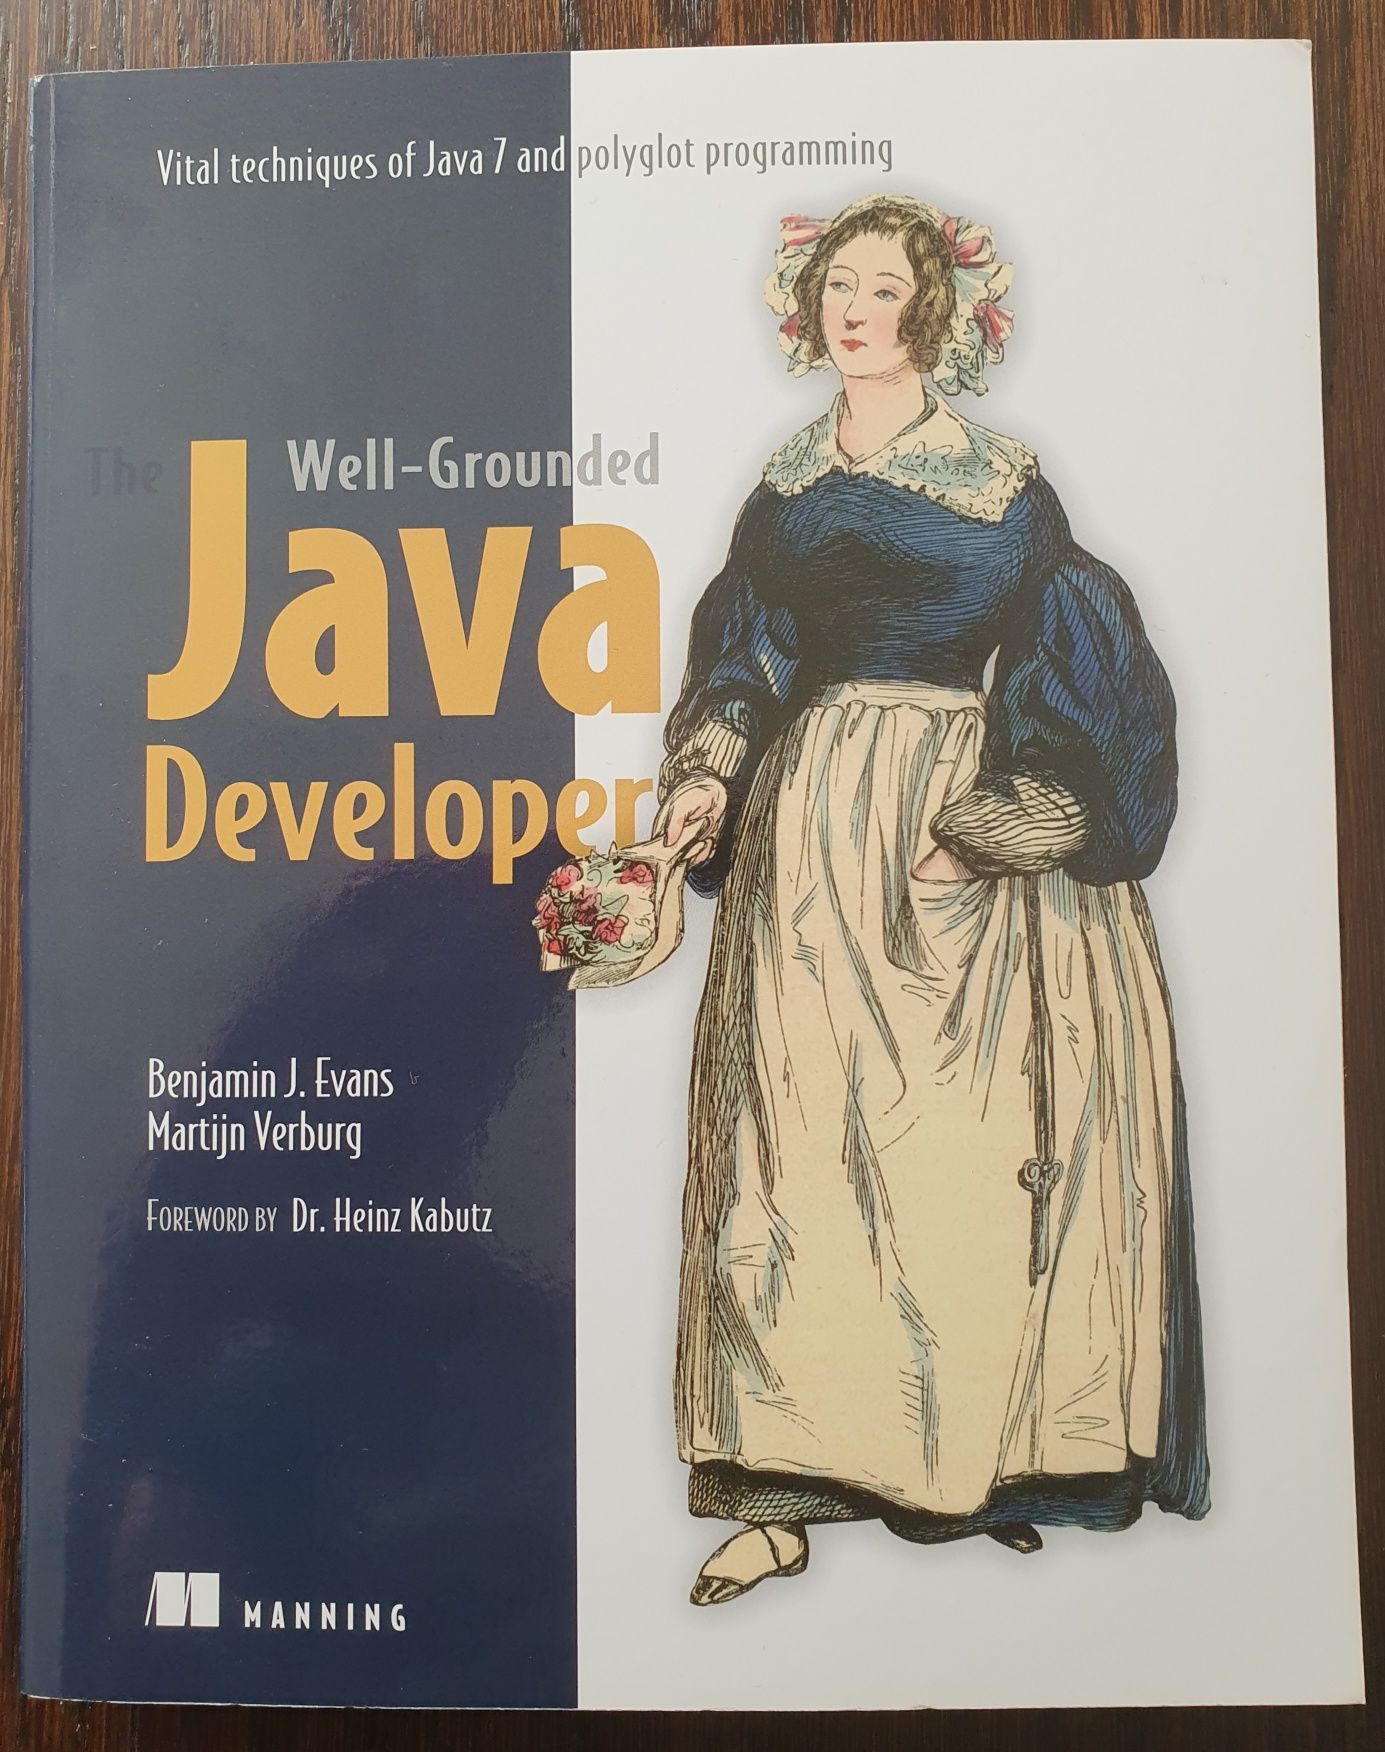 The Well-Grounded Java Developer (Ben Evans, Martijn Verburg)